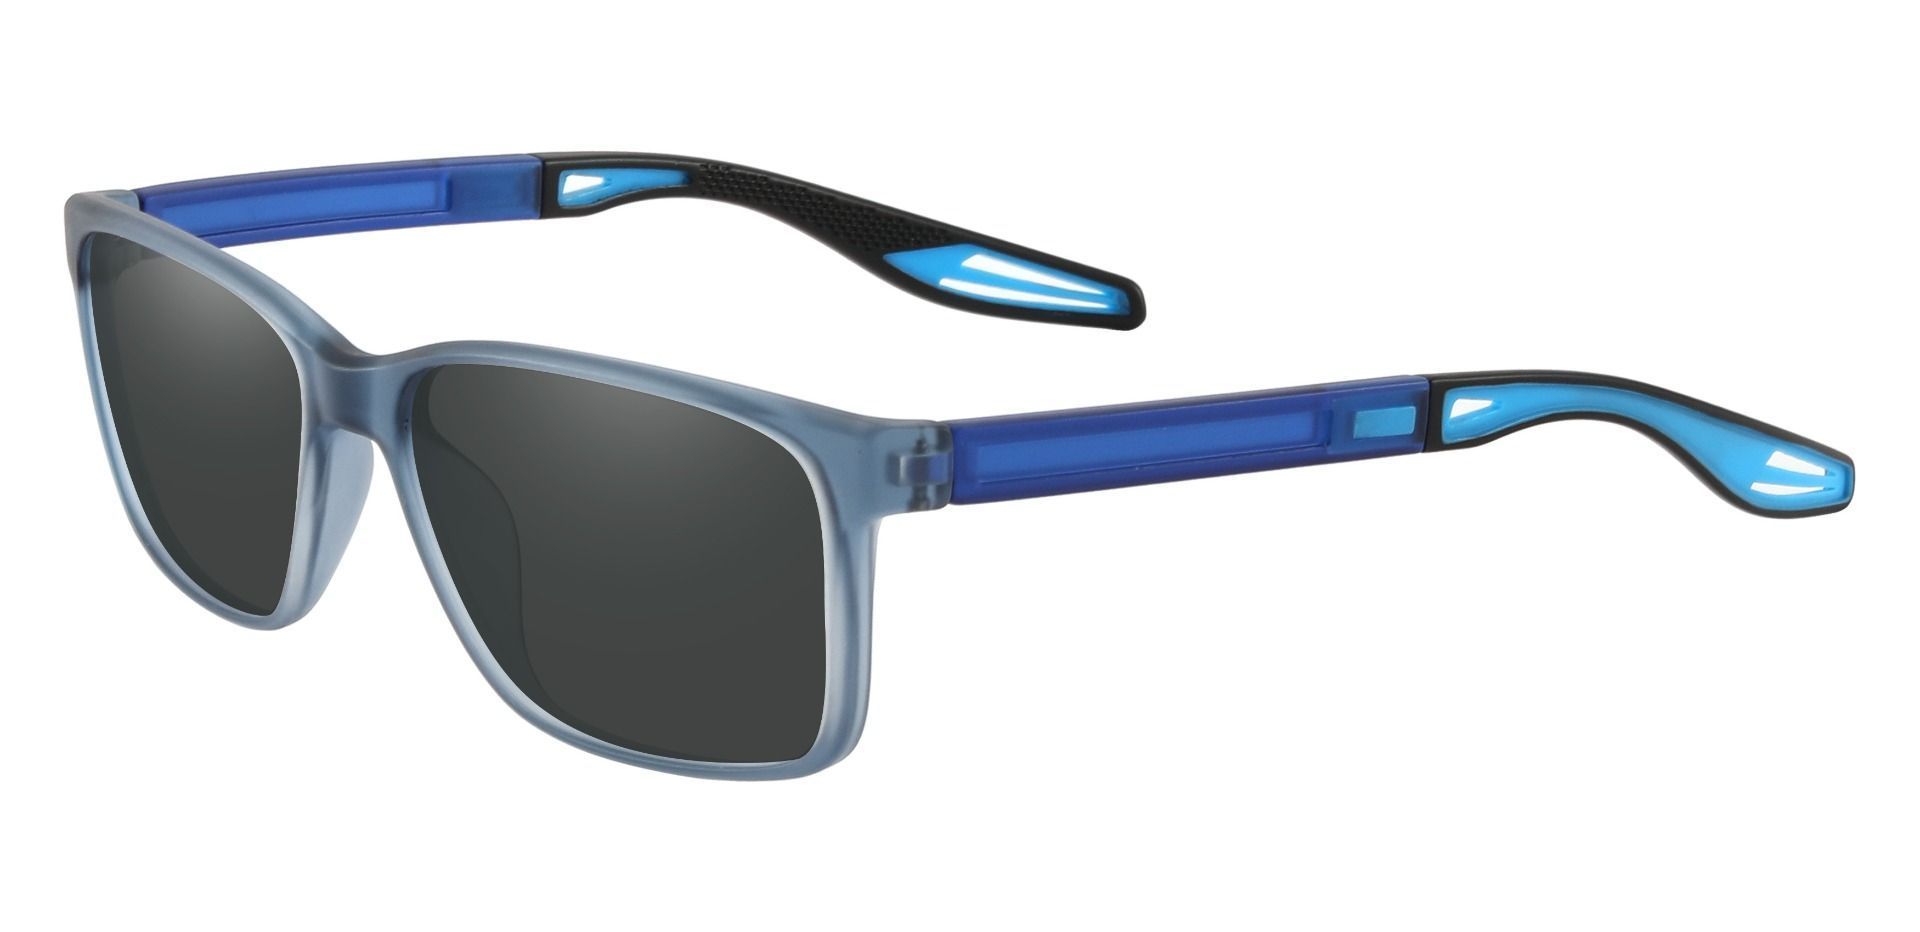 Nathan Rectangle Prescription Sunglasses - Blue Frame With Gray Lenses